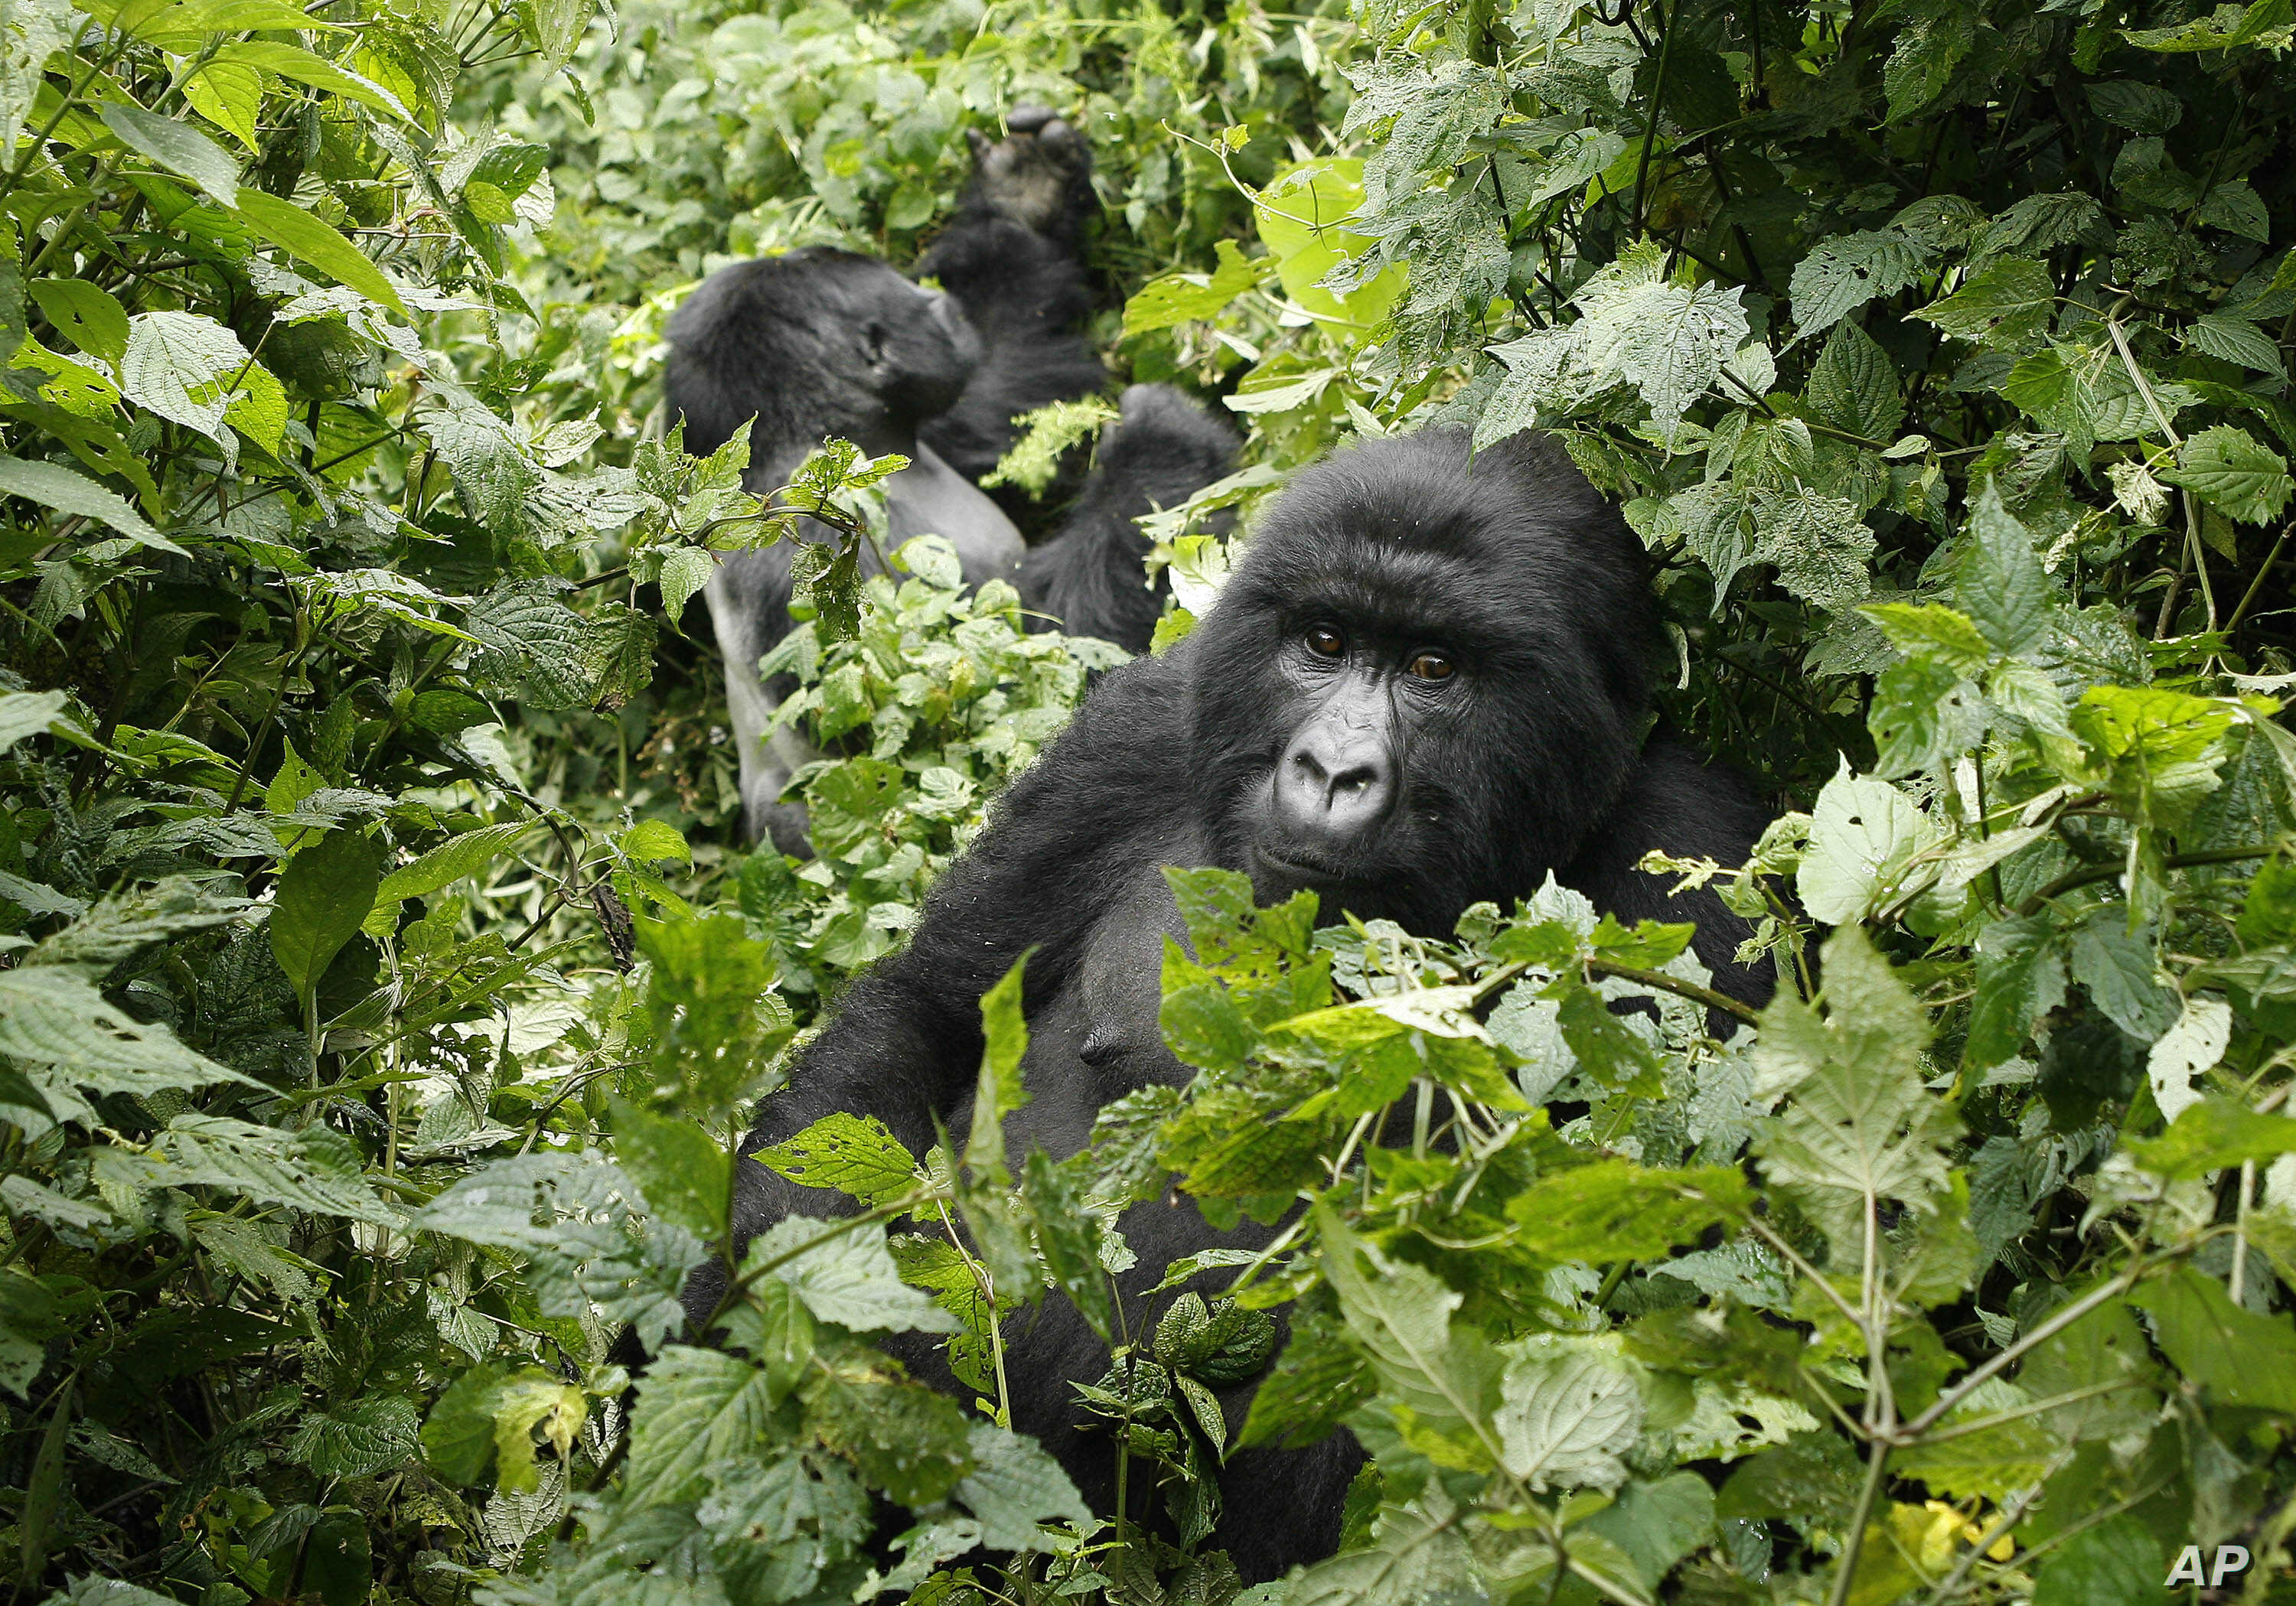 How to Access The Gorillas in Uganda